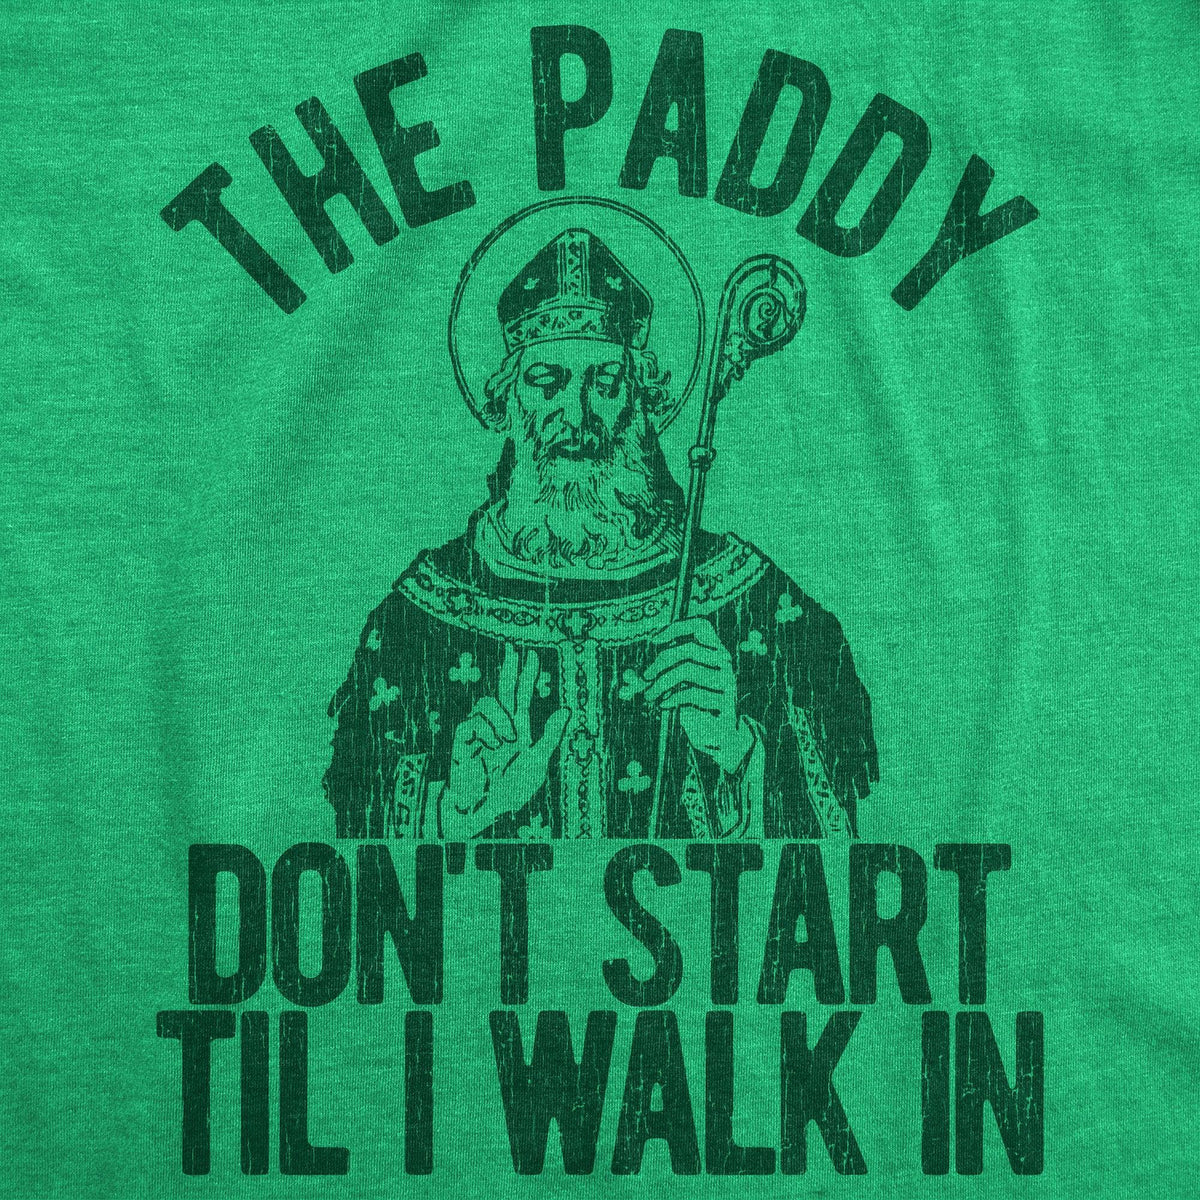 The Paddy Don&#39;t Start Til I Walk In Men&#39;s Tshirt  -  Crazy Dog T-Shirts